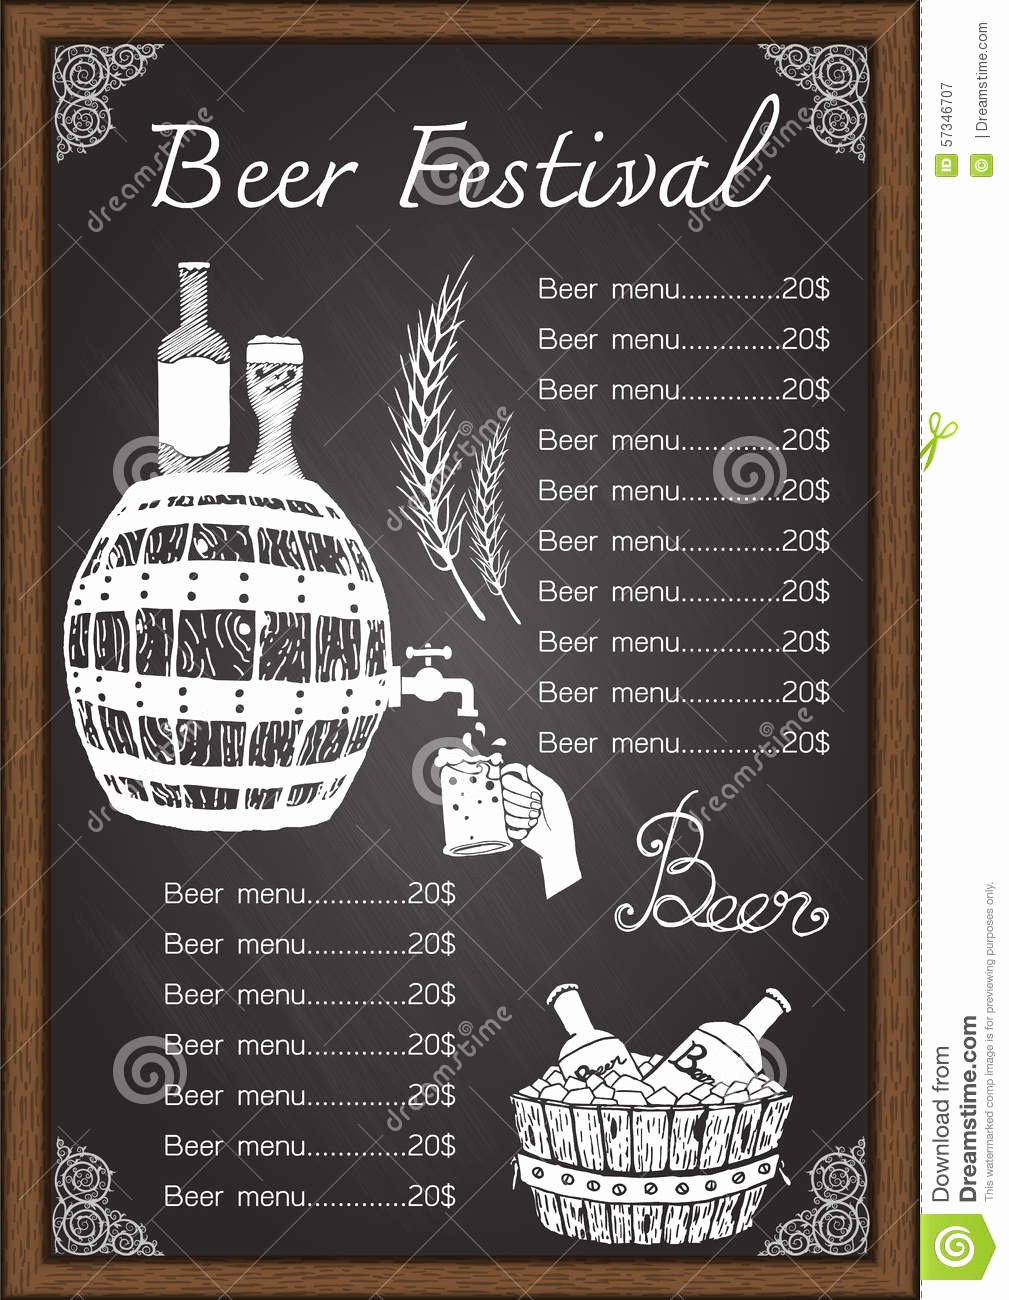 stock illustration beer menu drink menu chalkboard template image